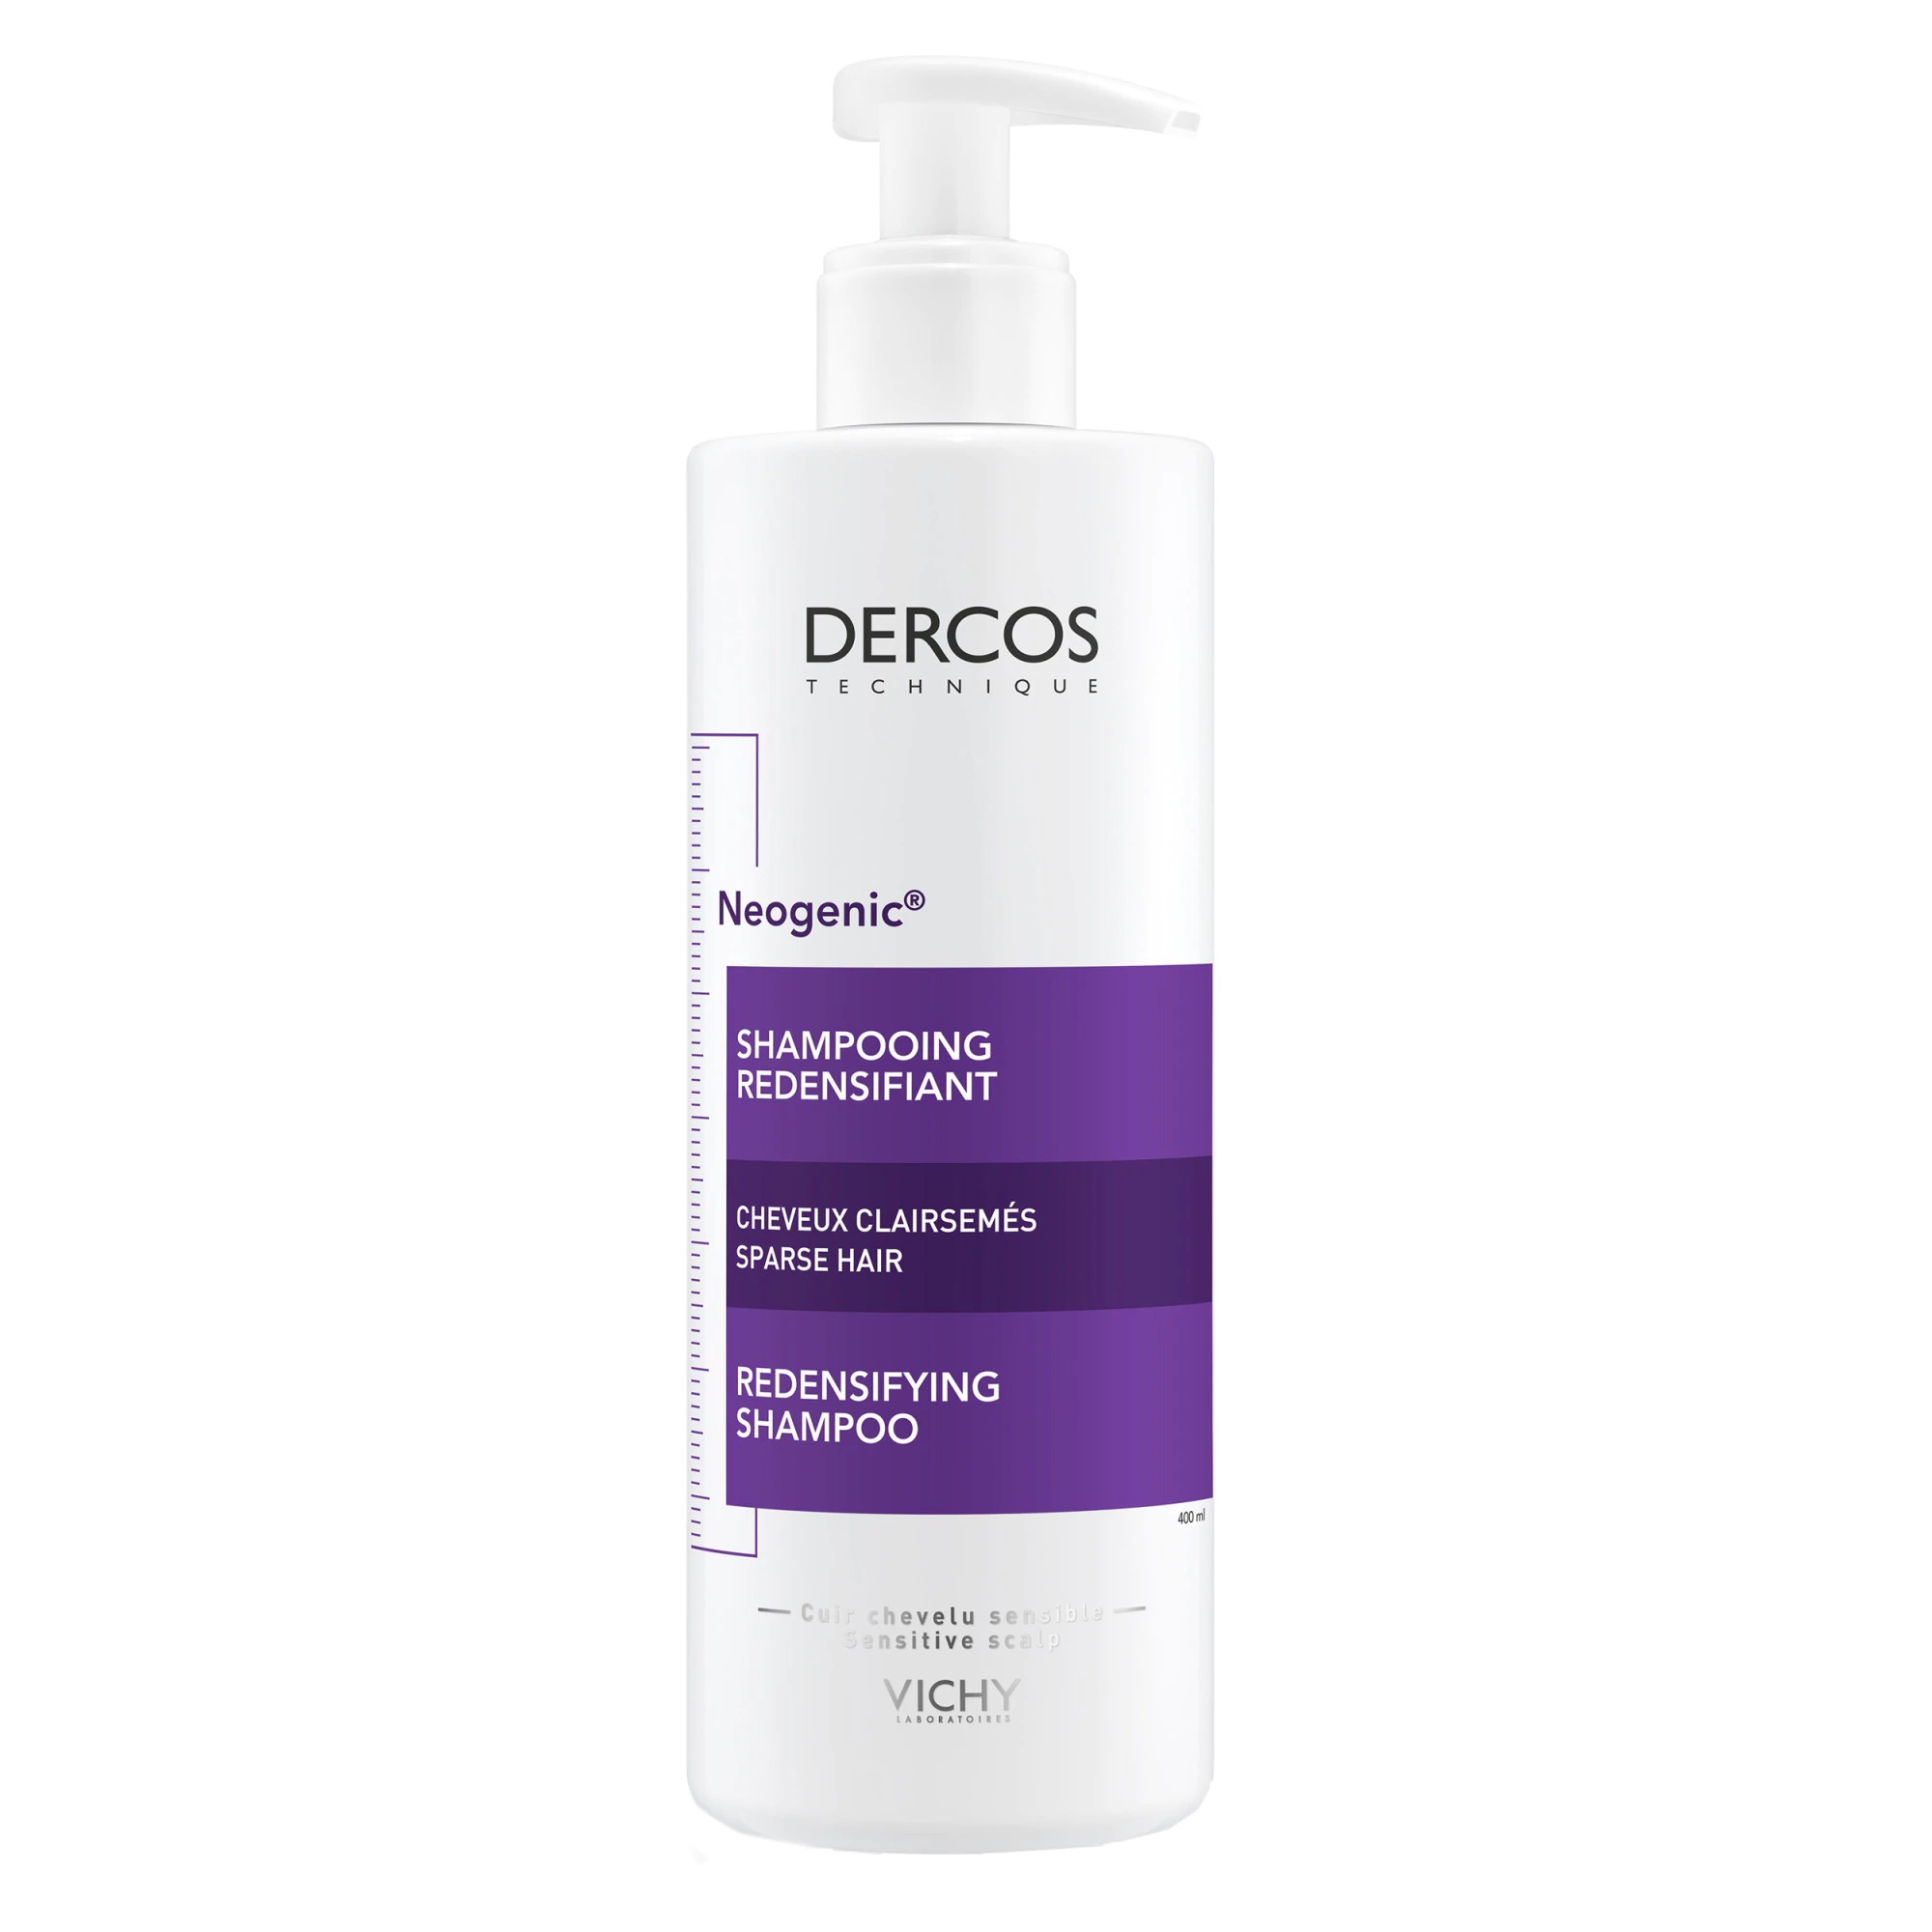 VICHY Dercos Şampon Neogenic Redensificator cu Stemoxidina®, 400 ml